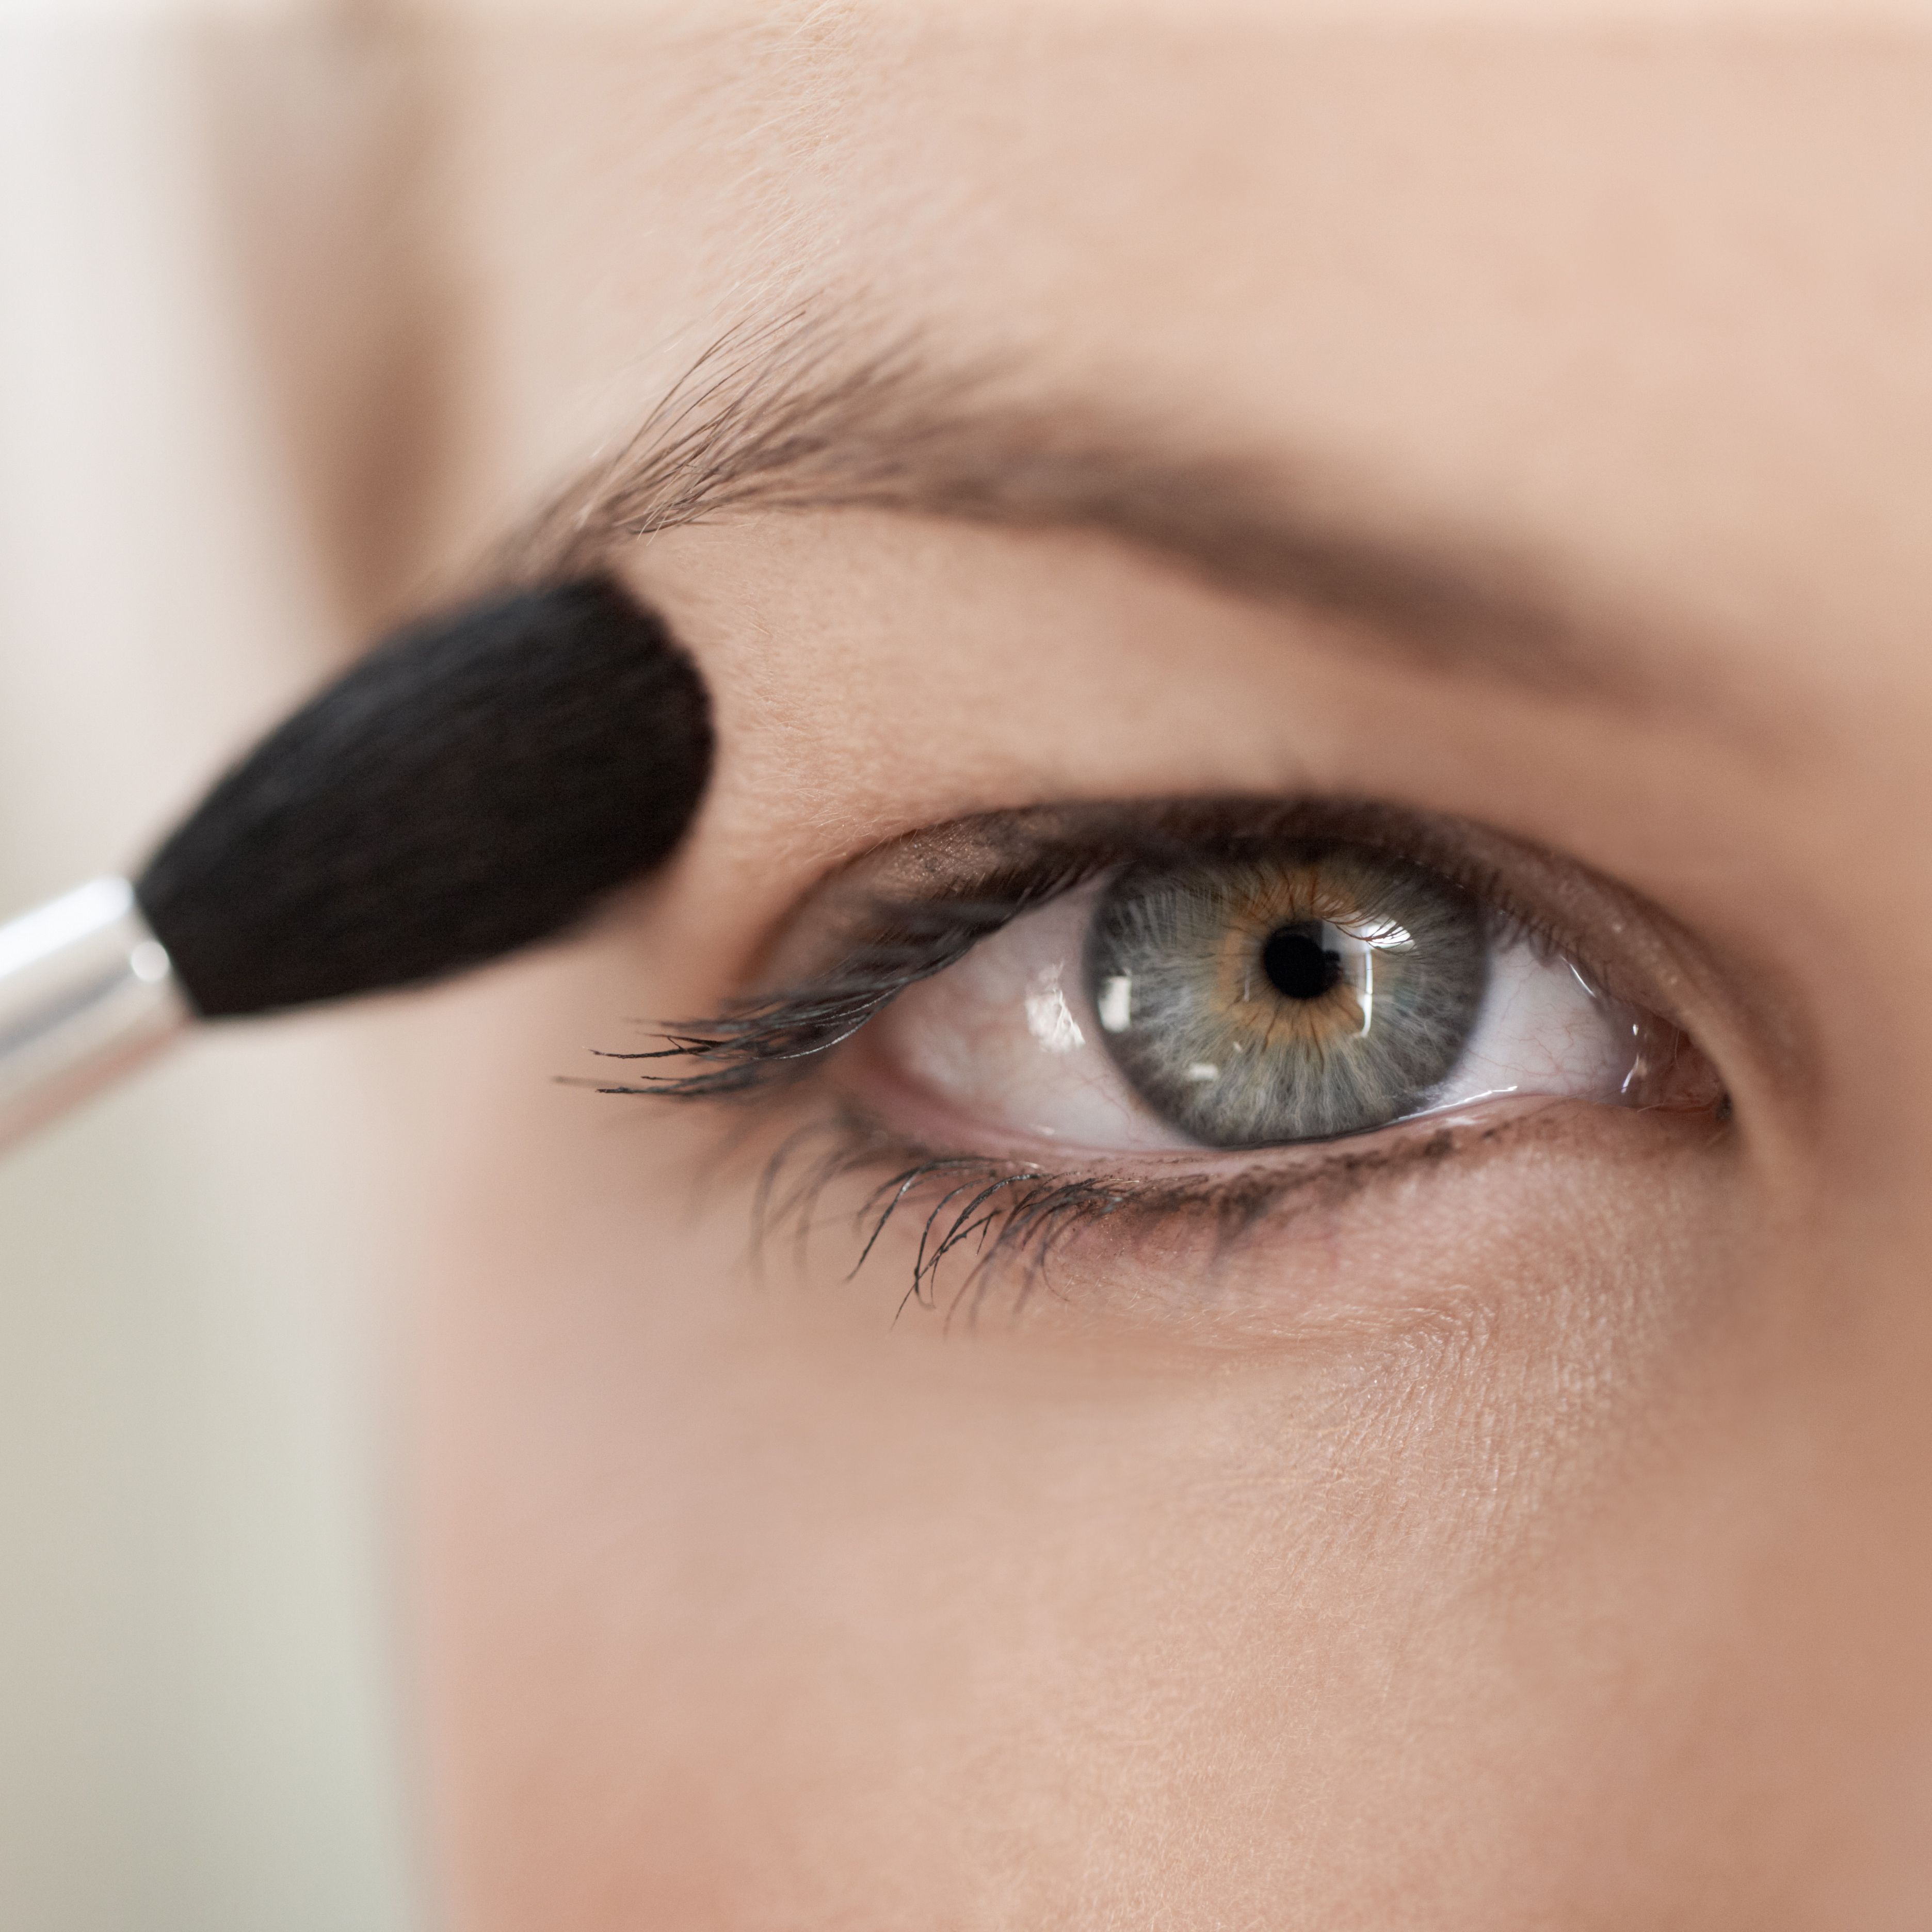 Best Makeup For Hooded Eyes Makeup Tricks For Hooded Eyes Hooded Eyes Makeup Tips And Tricks